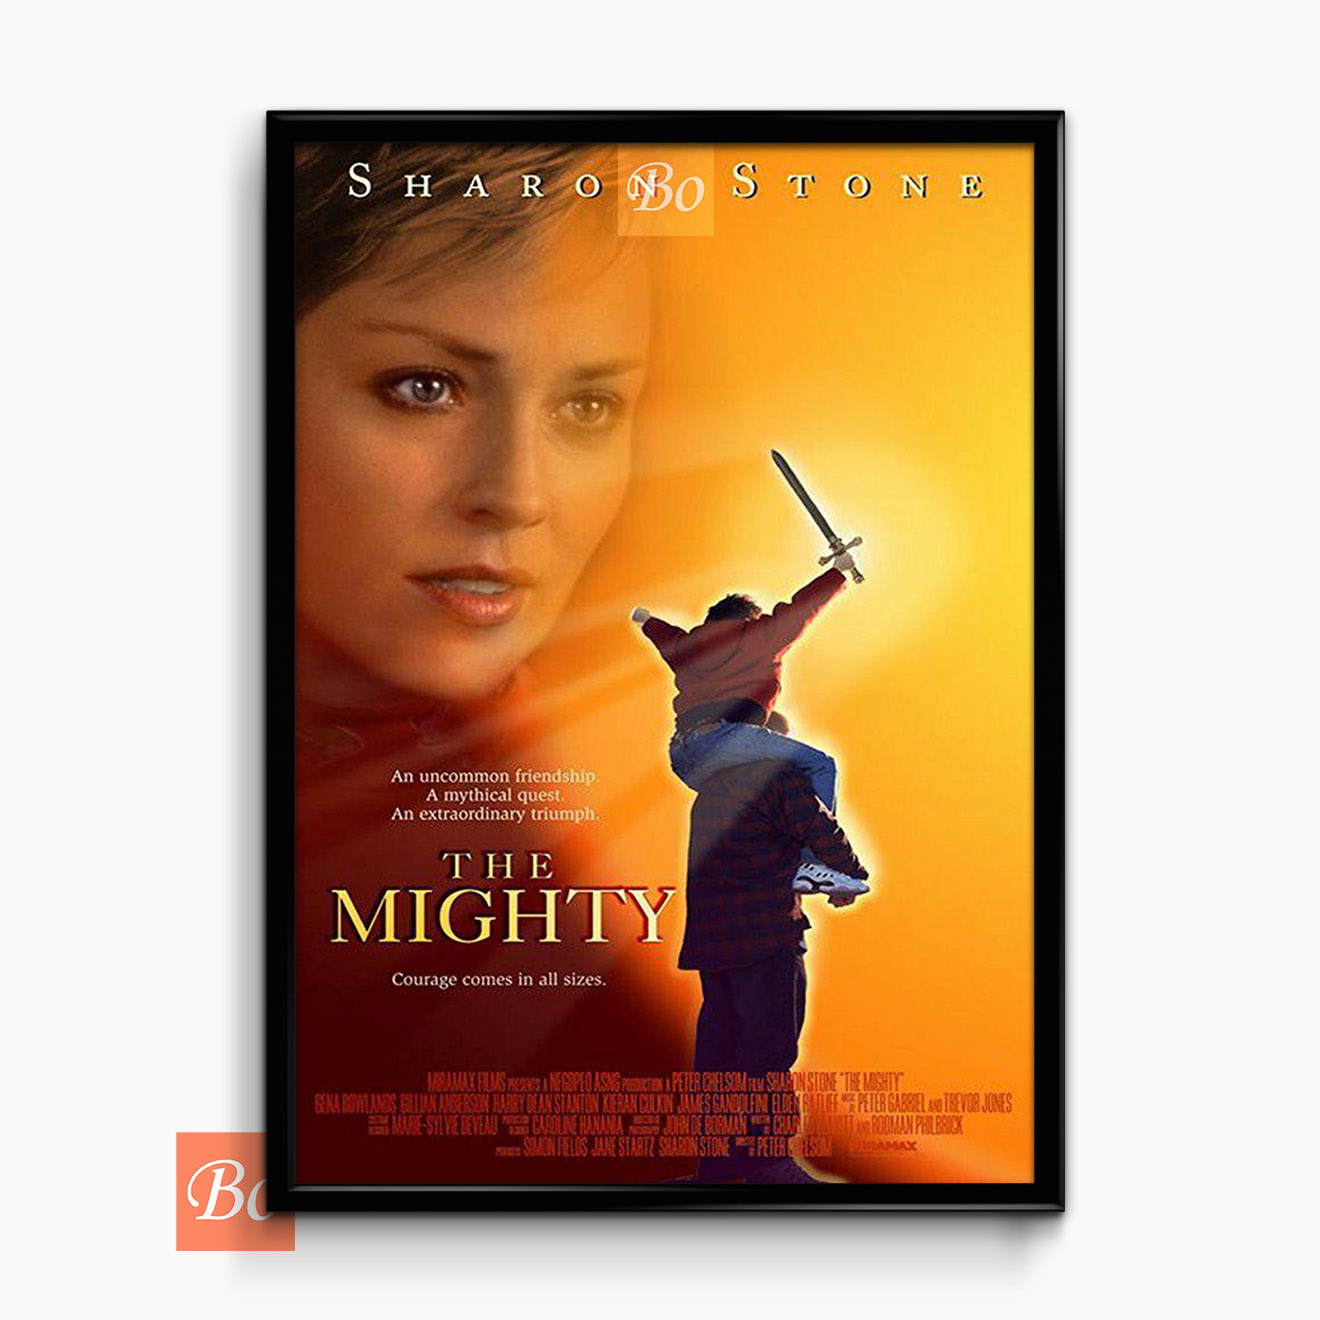 陪着你走 The Mighty 电影 (1998)